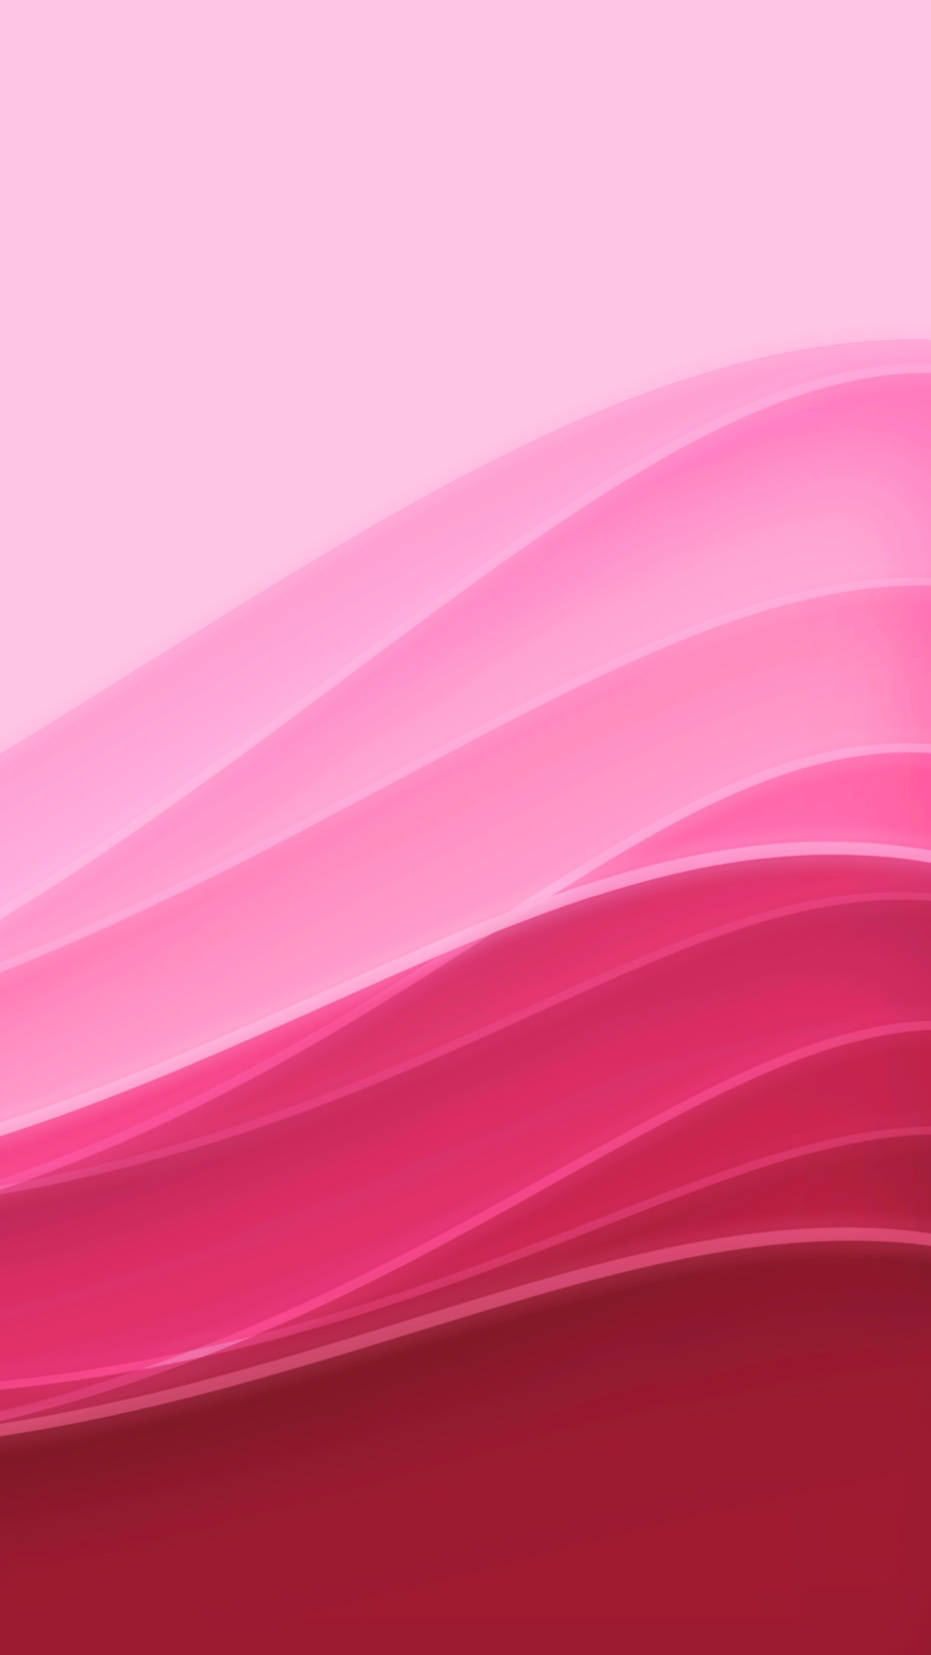 Plain Pink Gradient Waves Iphone